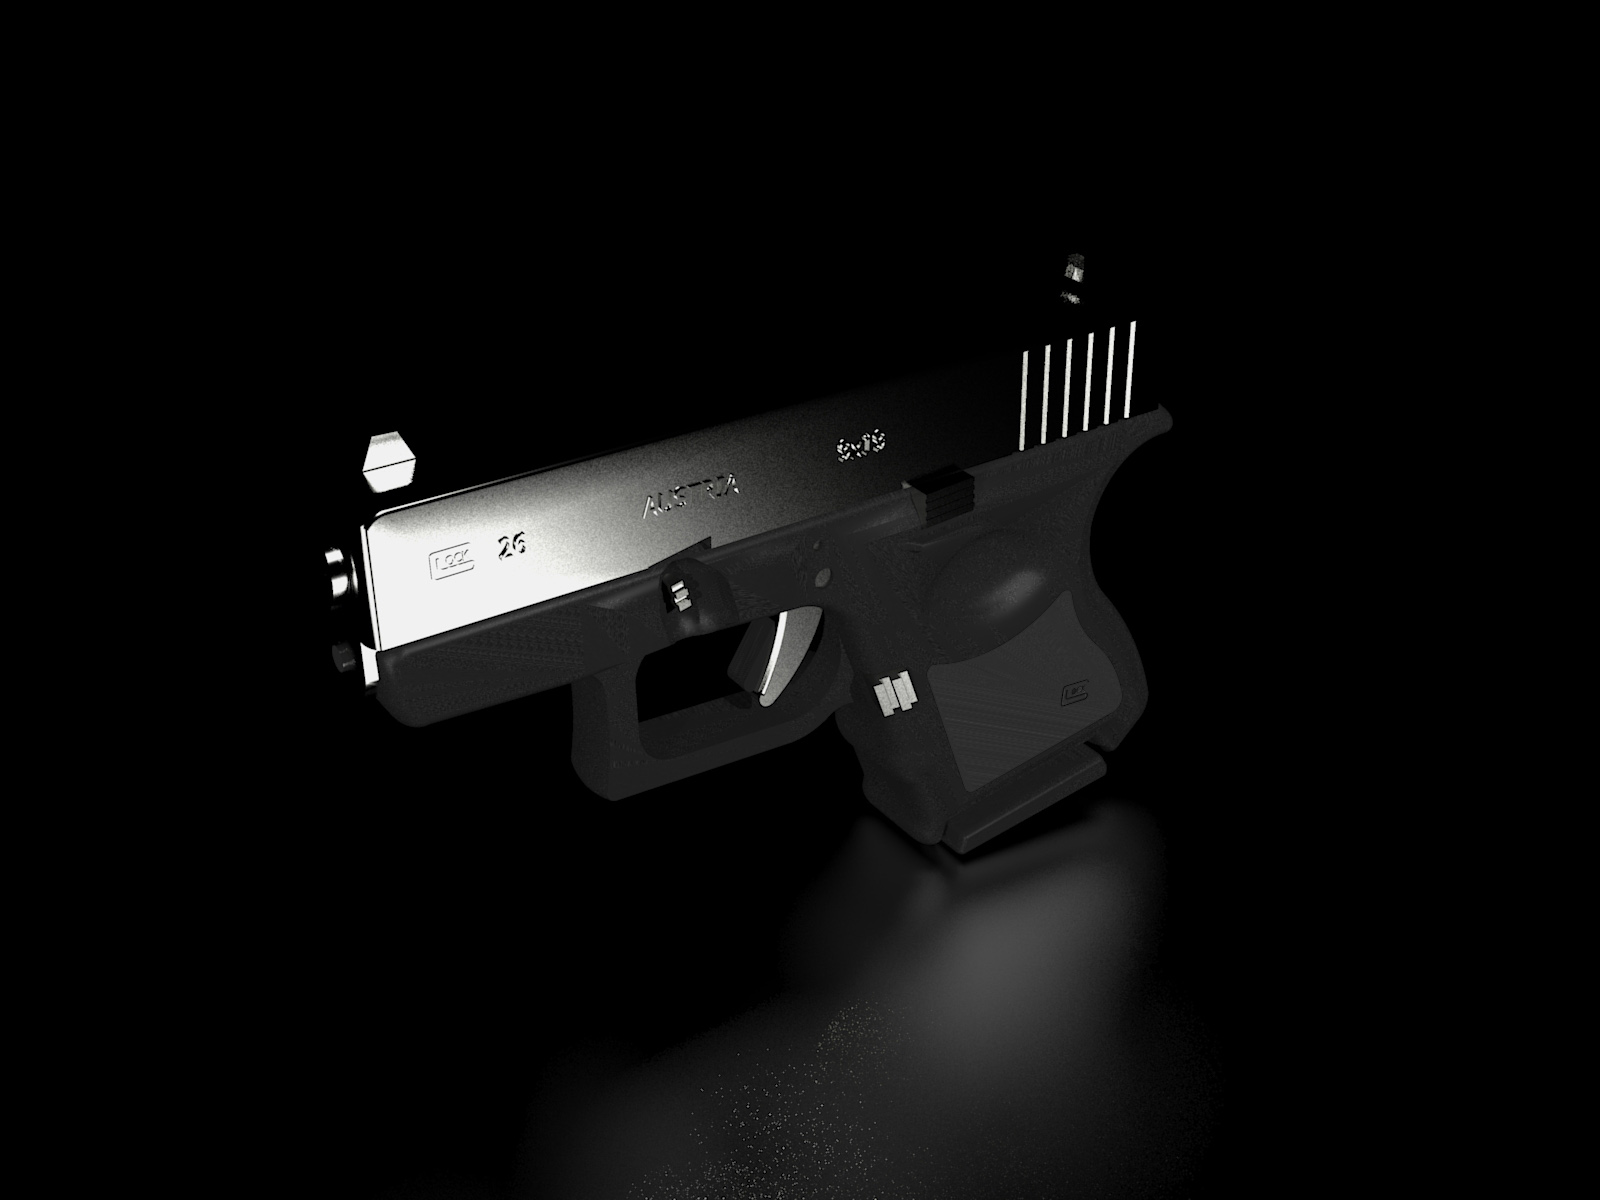 Glock Gun Image Wallpaper In High Resolution For Get HD